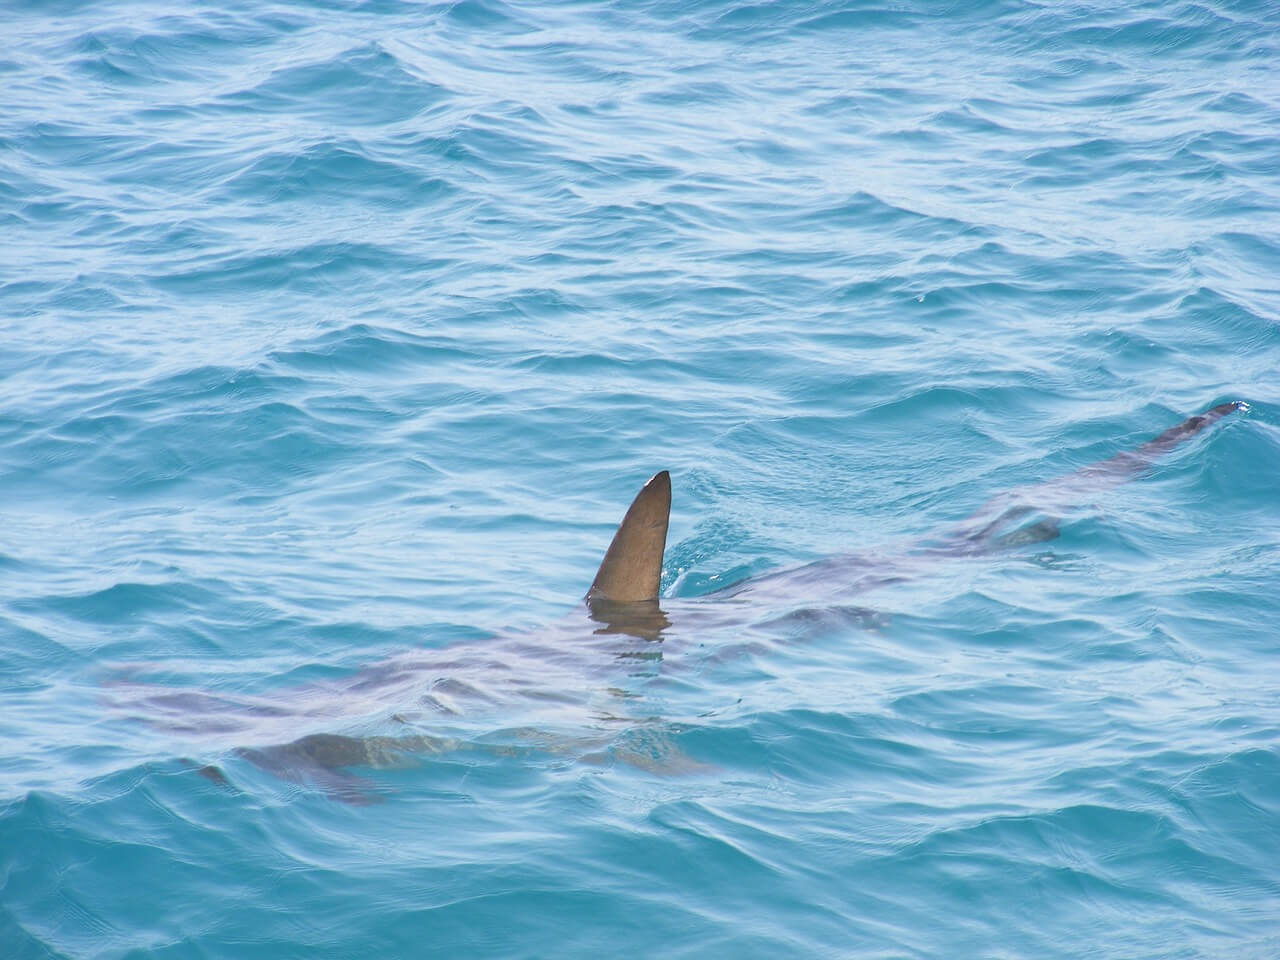 Massive Shark Sighting Prompts Emergency Advisory at Popular Beach